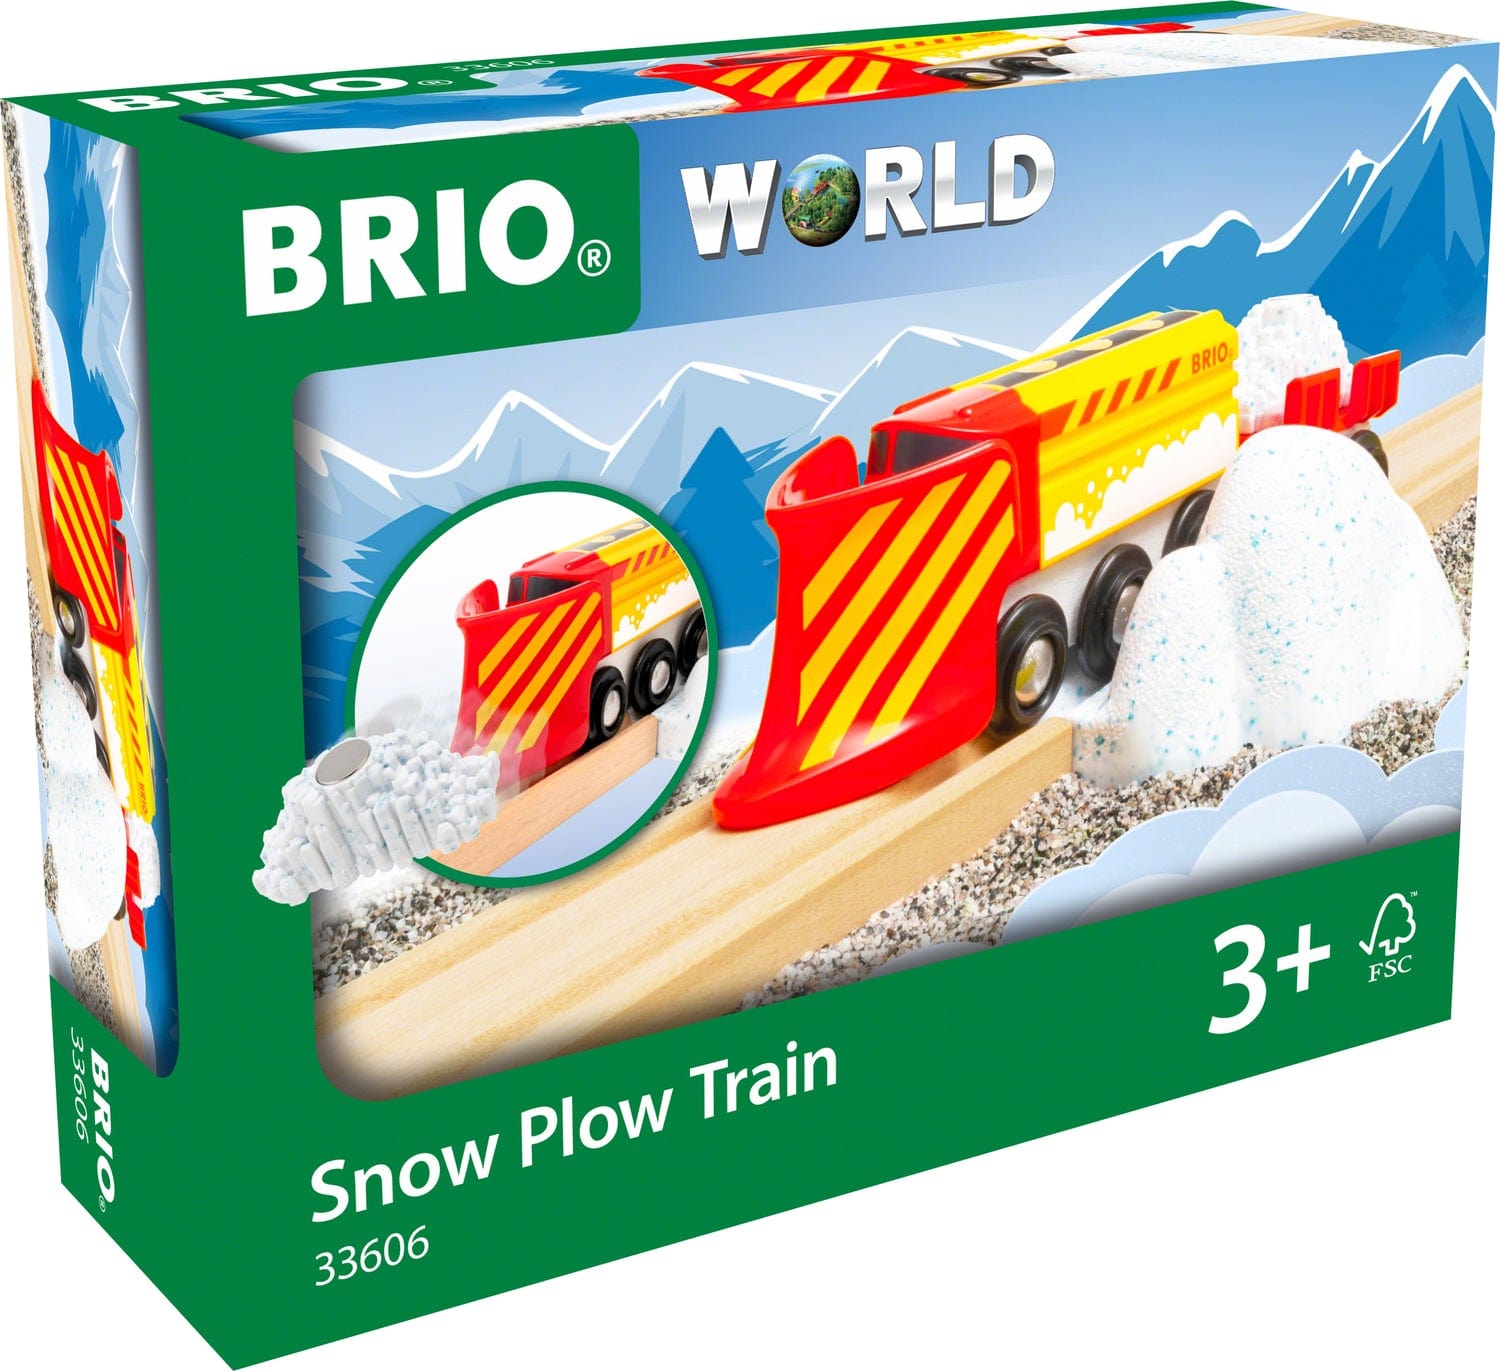 BRIO Snow Plow Train - Saltire Games